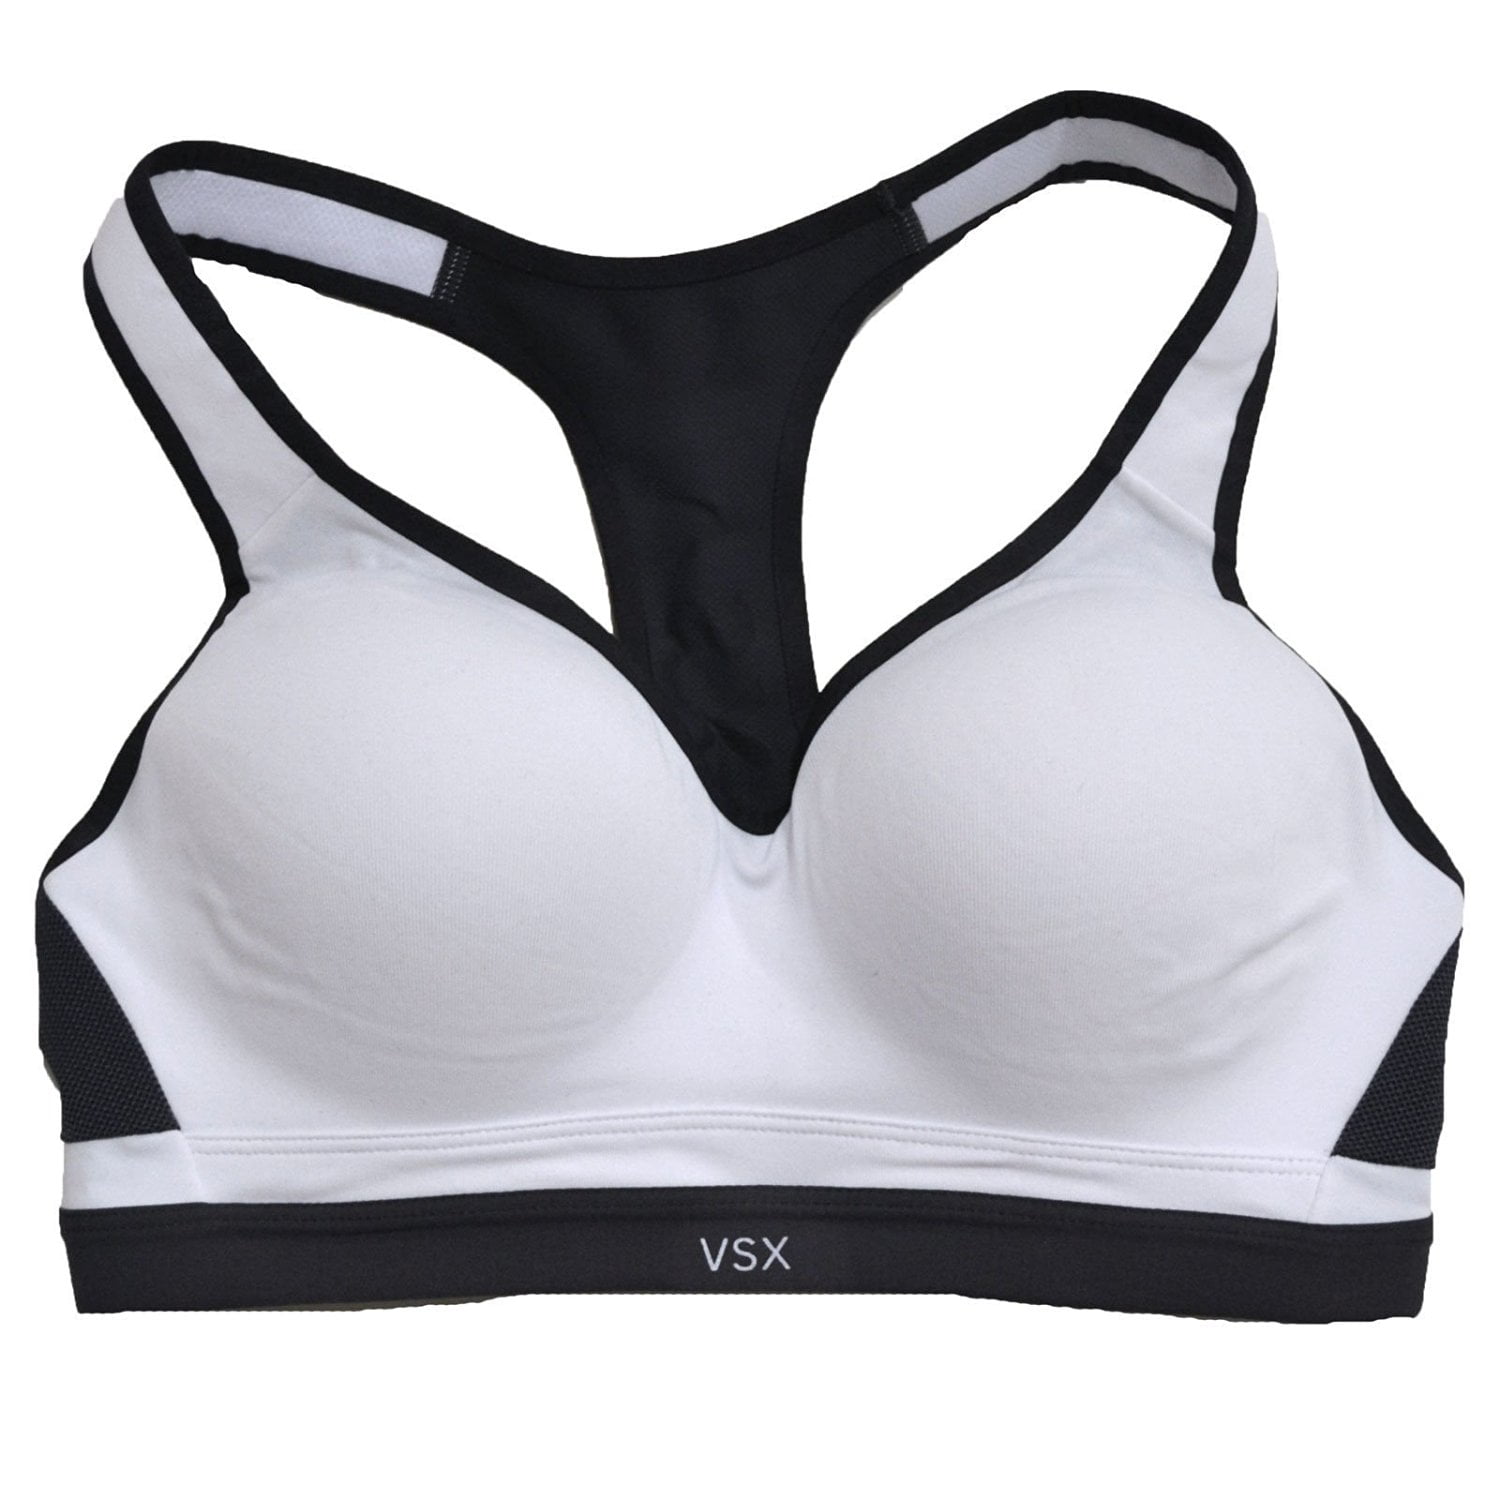 VSX Sport Color Block Gray Sports Bra Size Sm (34B) - 56% off